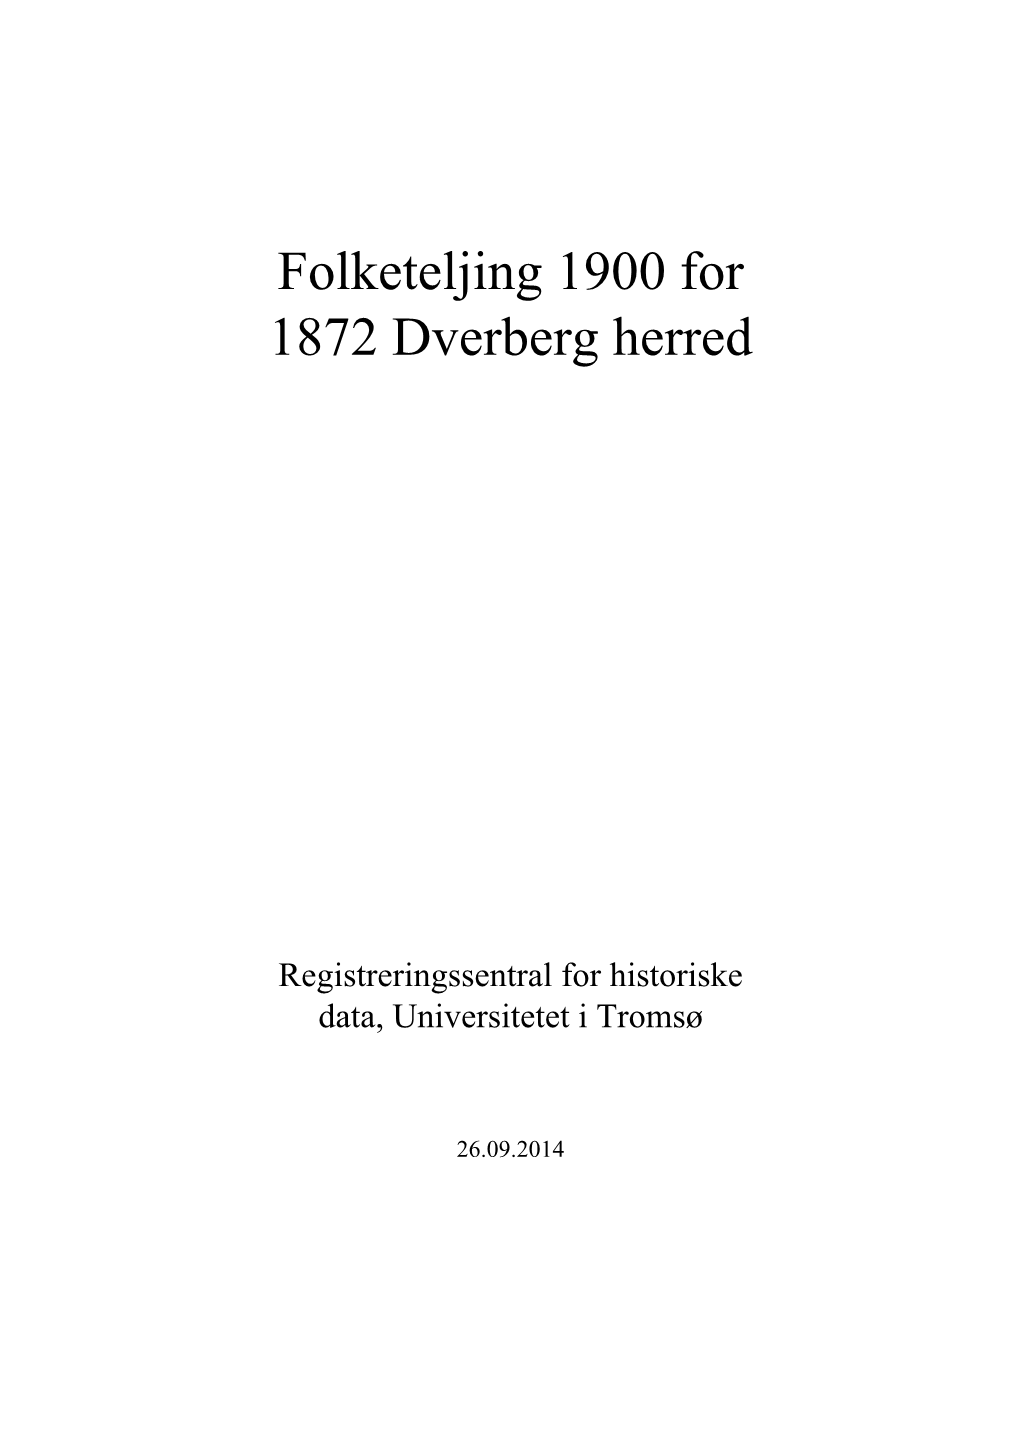 Folketeljing 1900 for 1872 Dverberg Herred